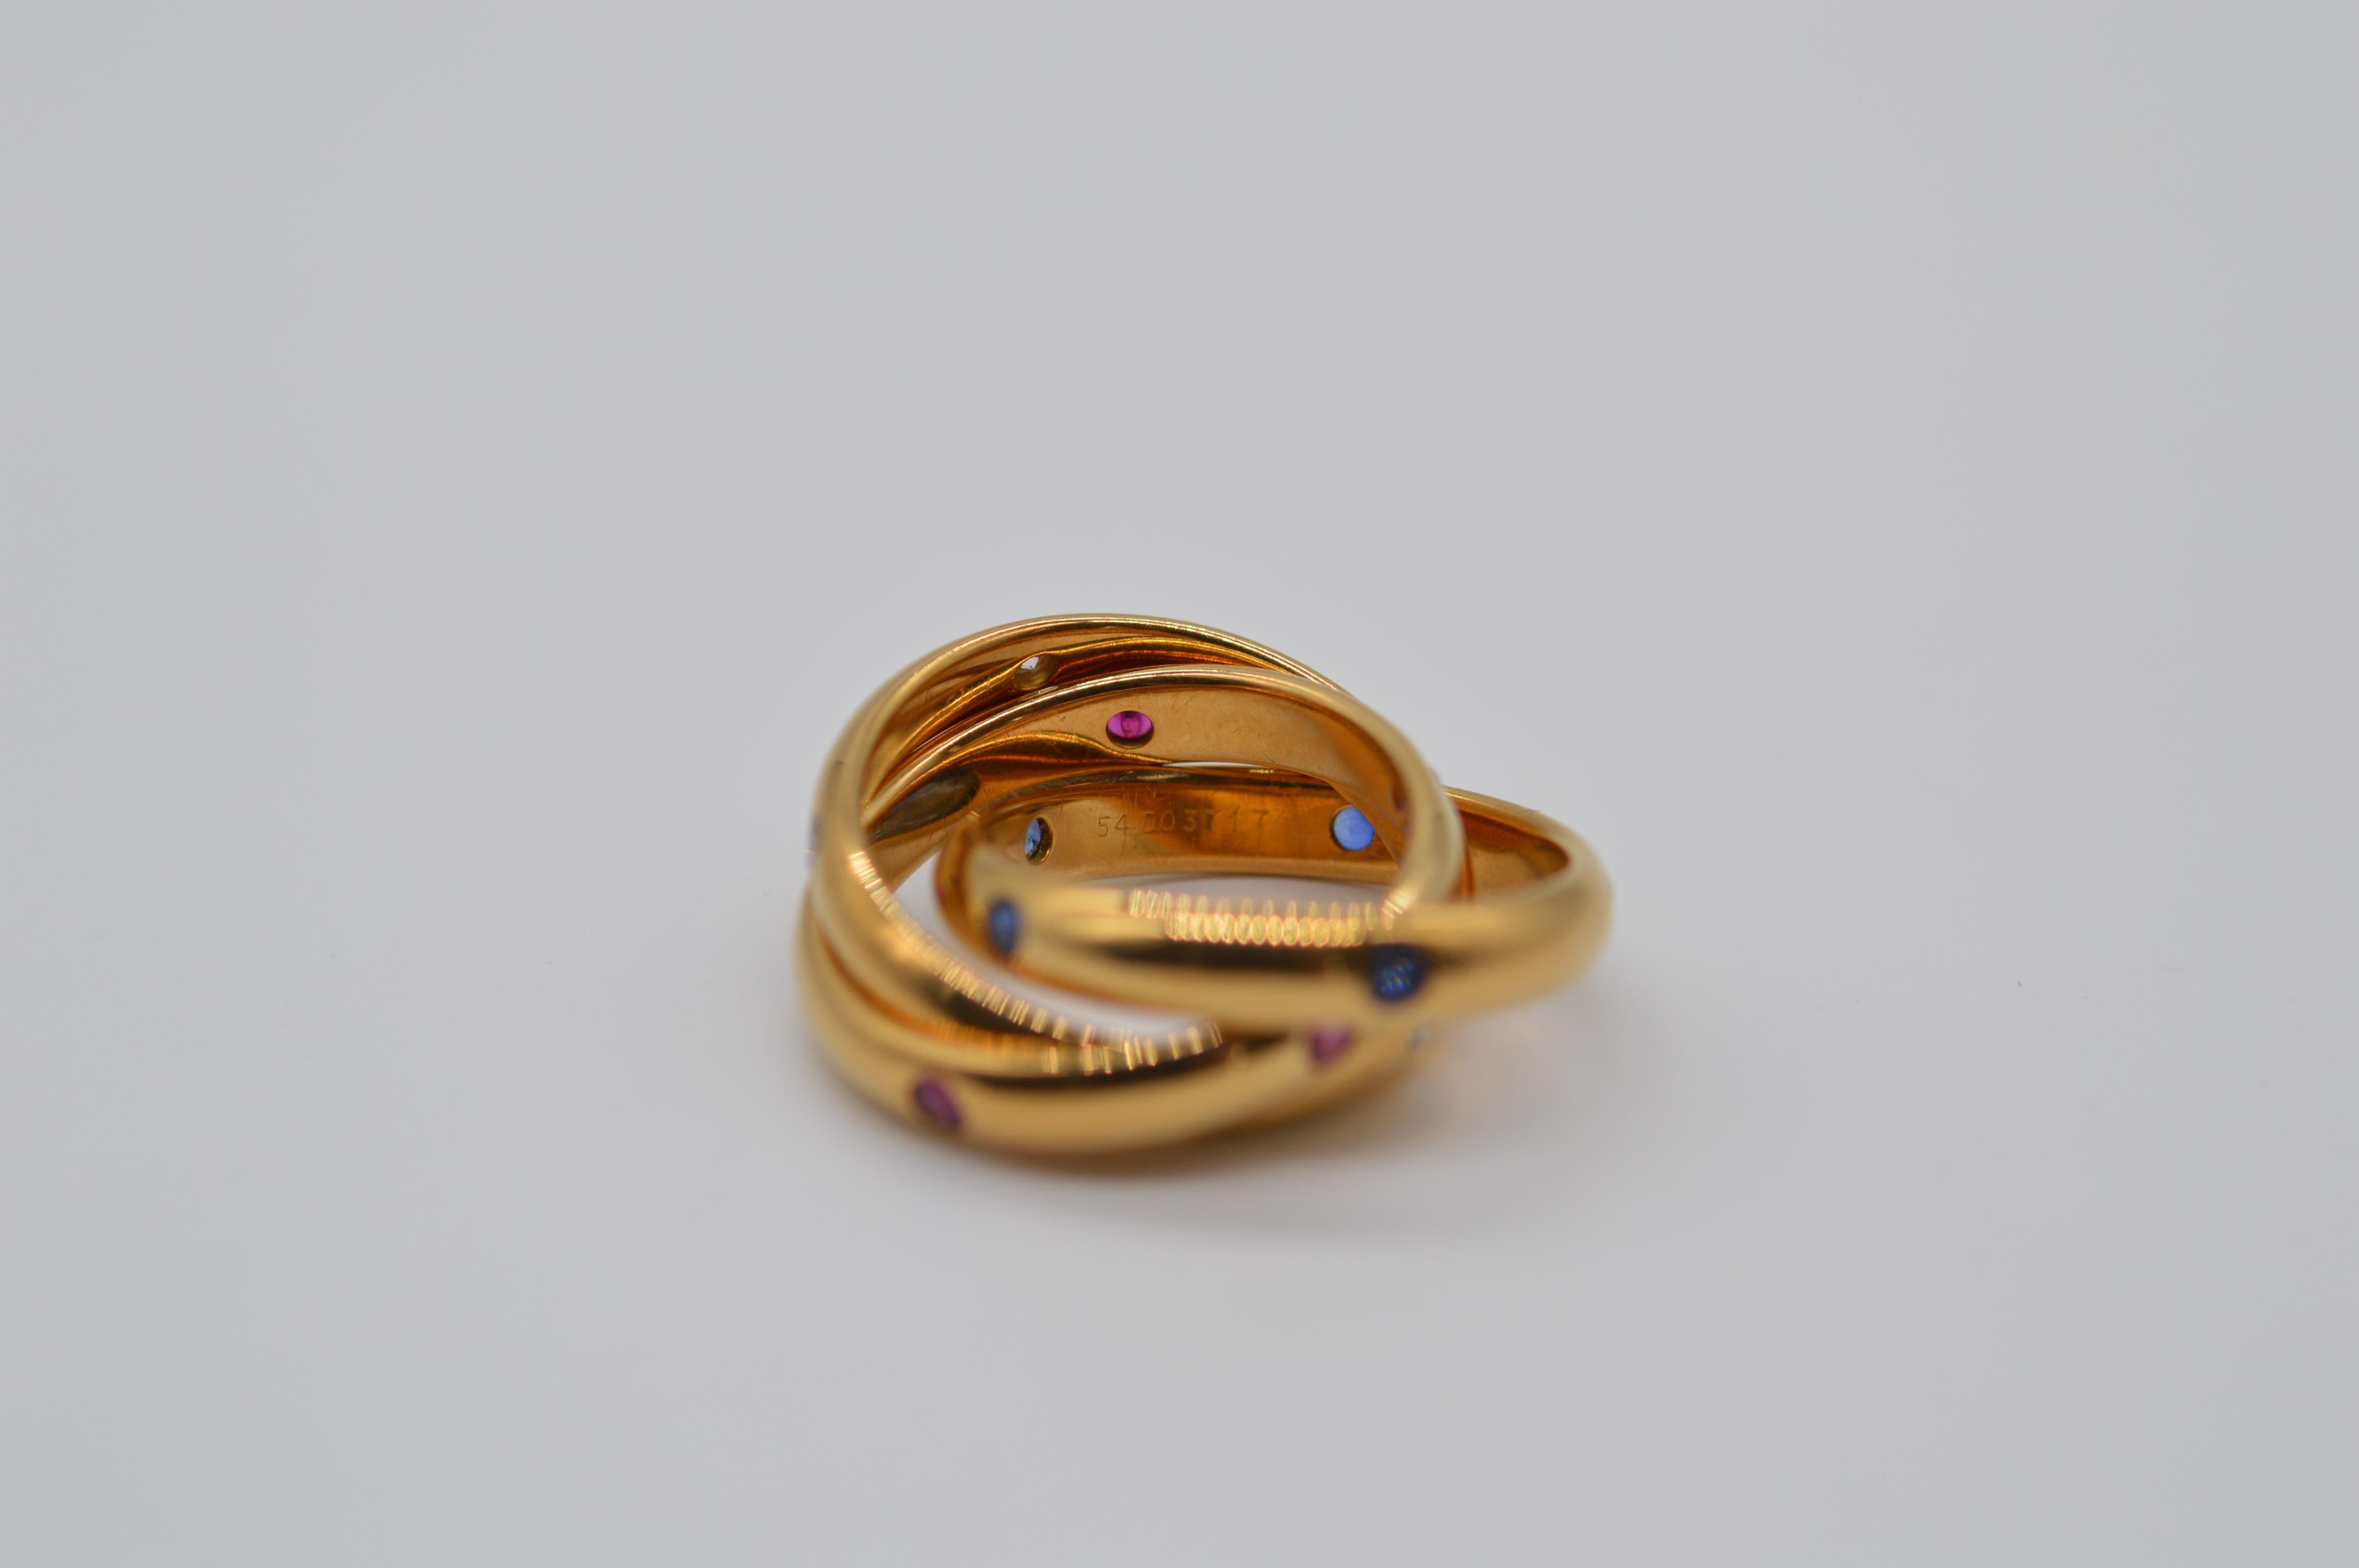 Modern Cartier Trinity 18K Yellow Gold Ring with Diamonds, Rubys & Sapphires Unworn